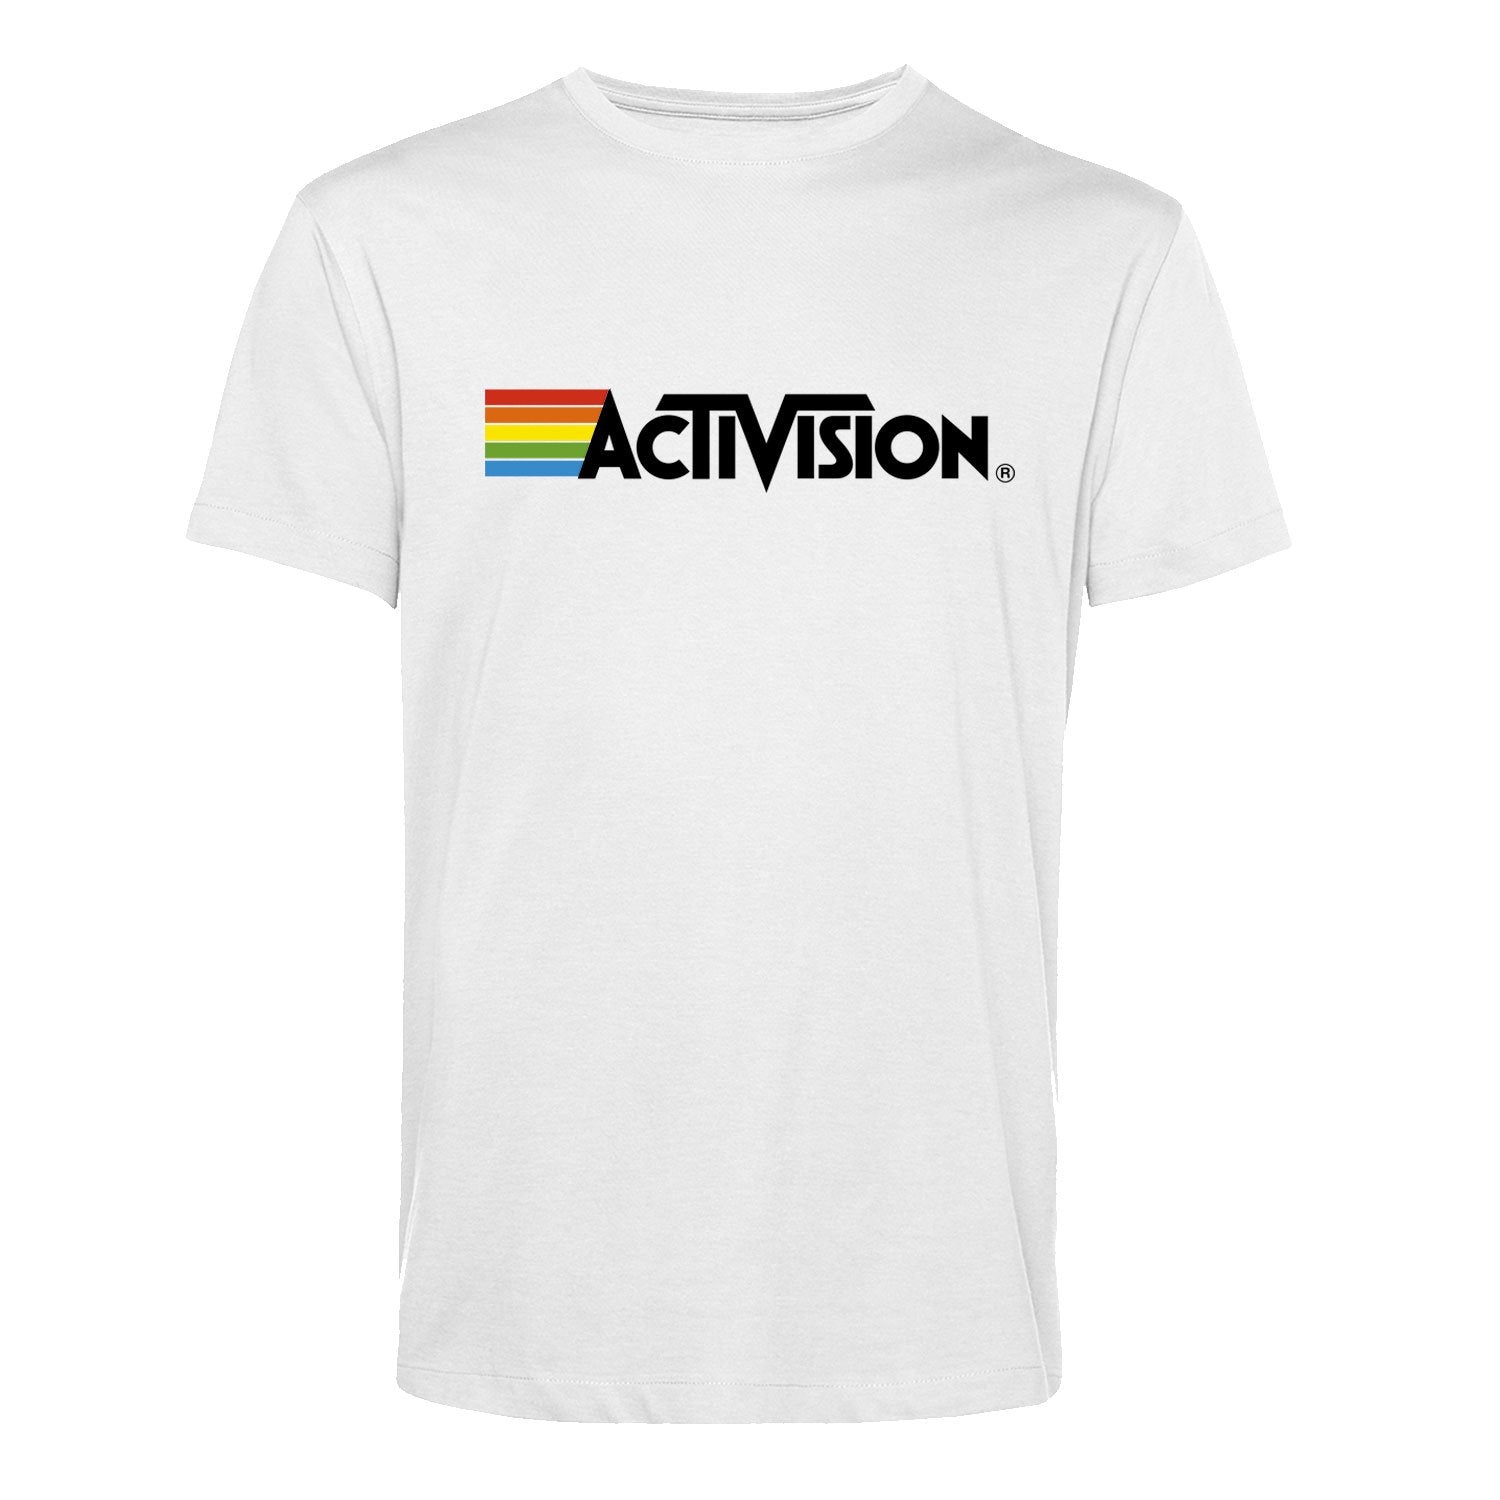 Activision Men's T-Shirt, White Unisex Style